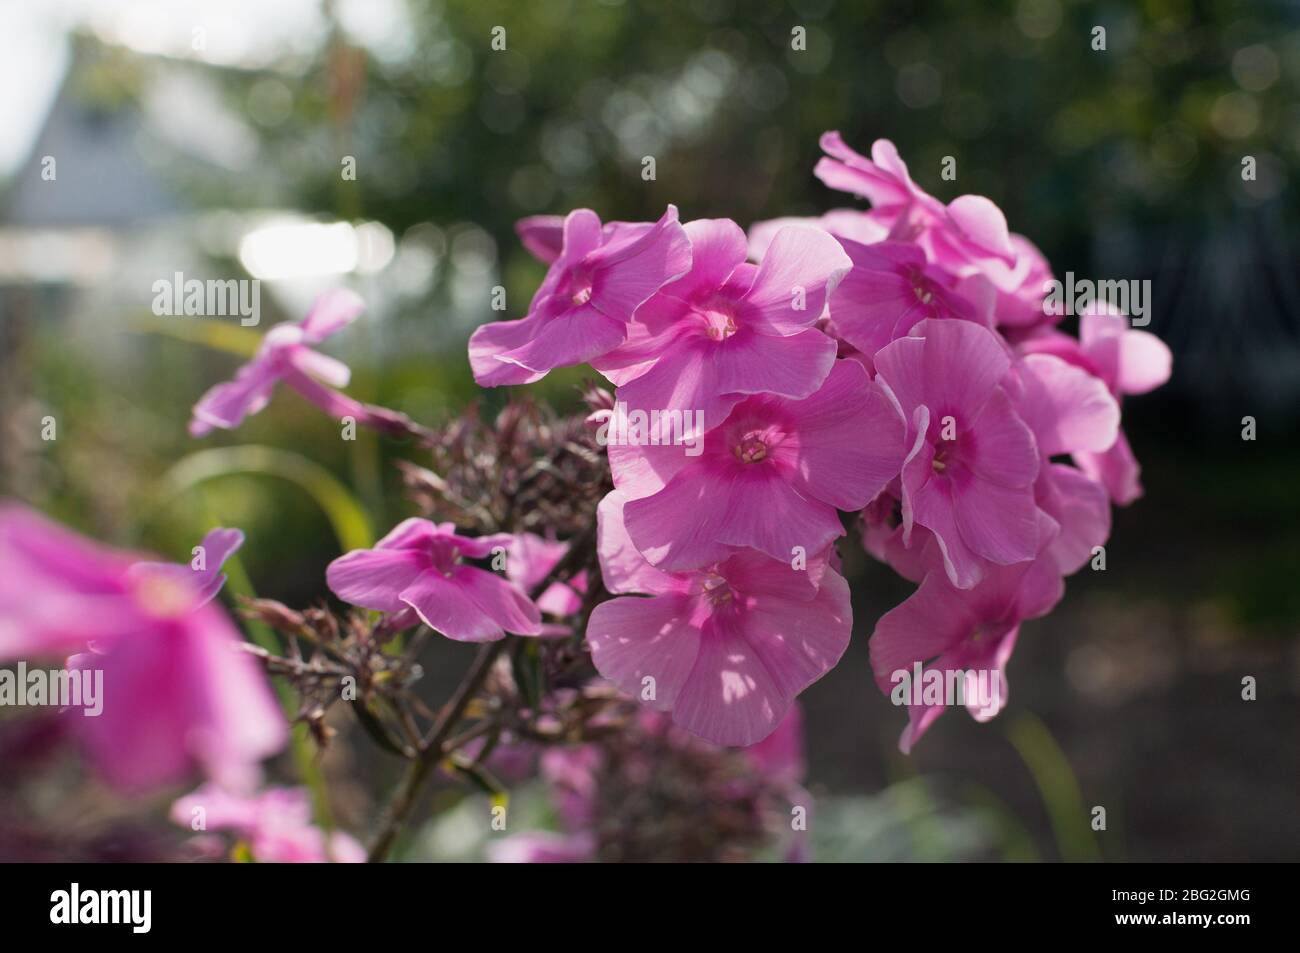 pink Phlox flowers in the summer garden Stock Photo